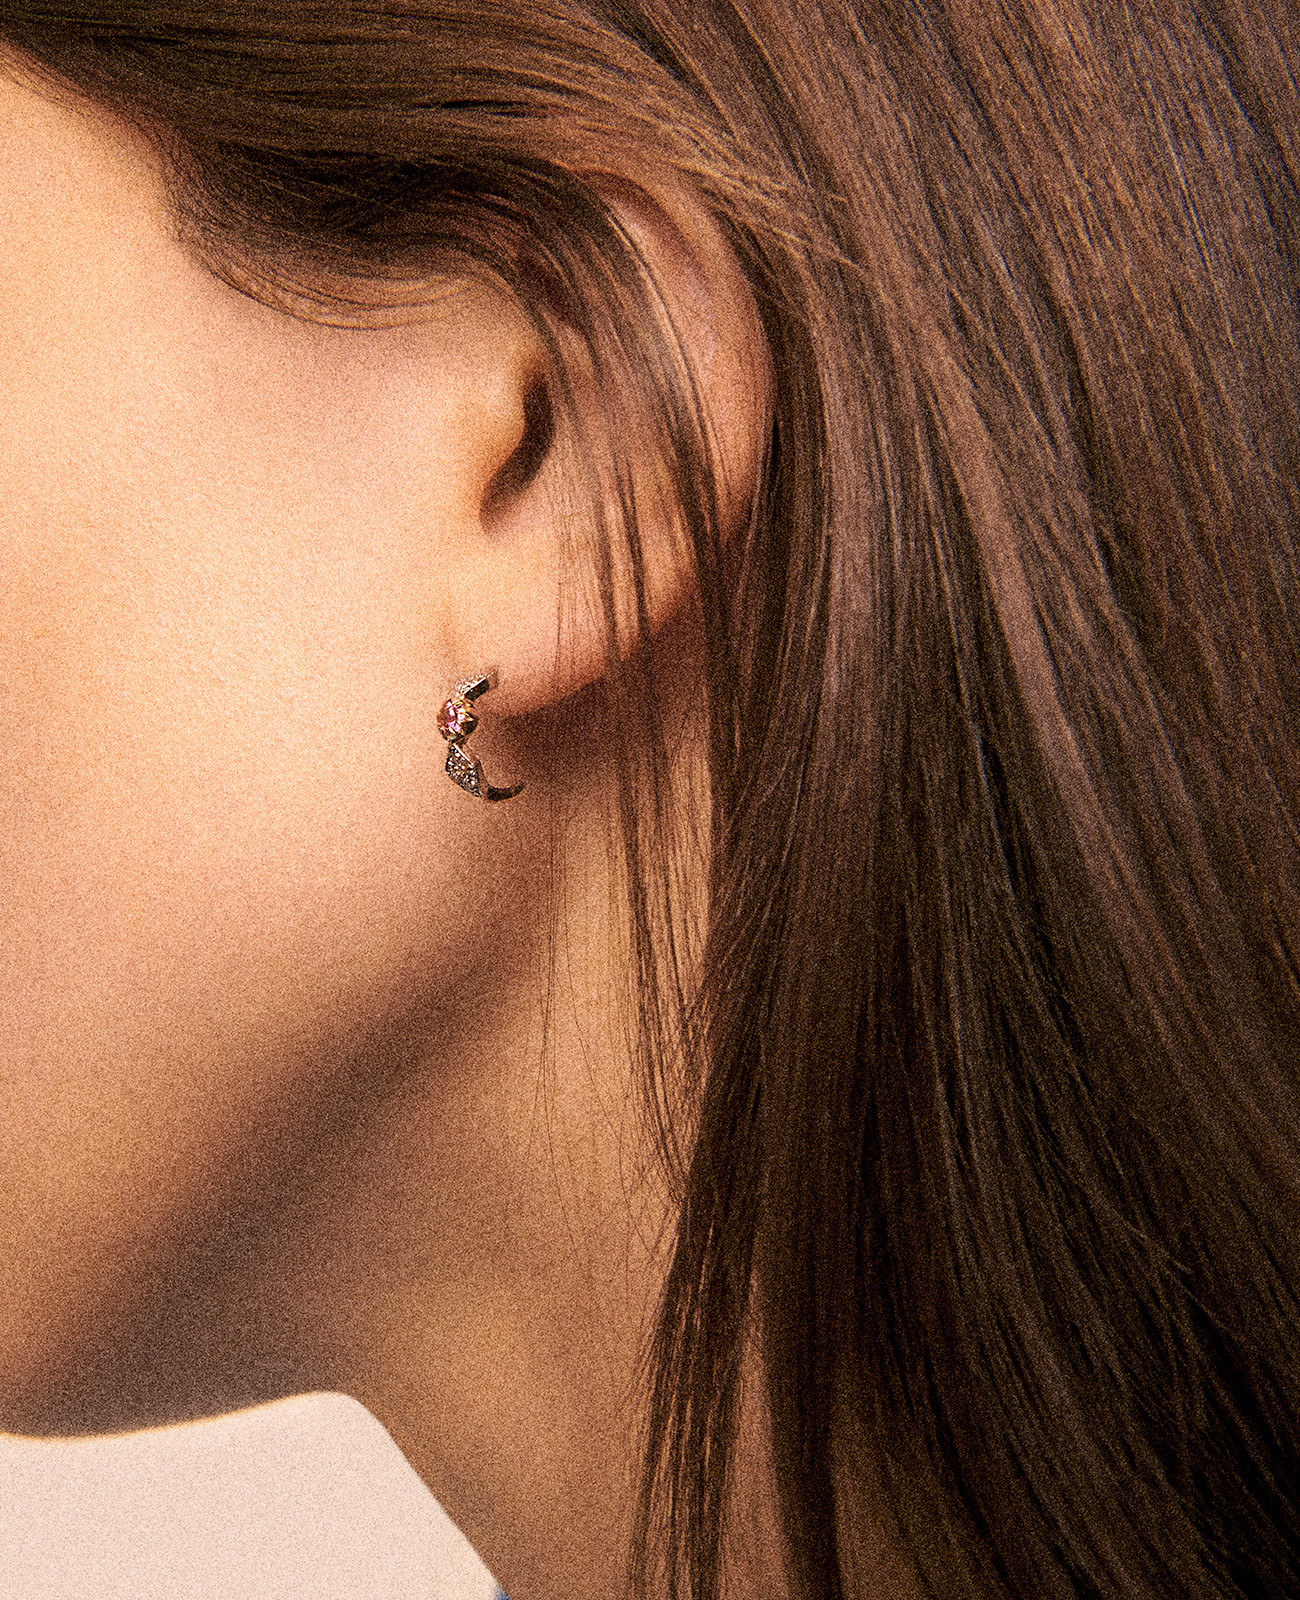 ADELE N°1 PINK SAPPHIRE earring pascale monvoisin jewelry paris